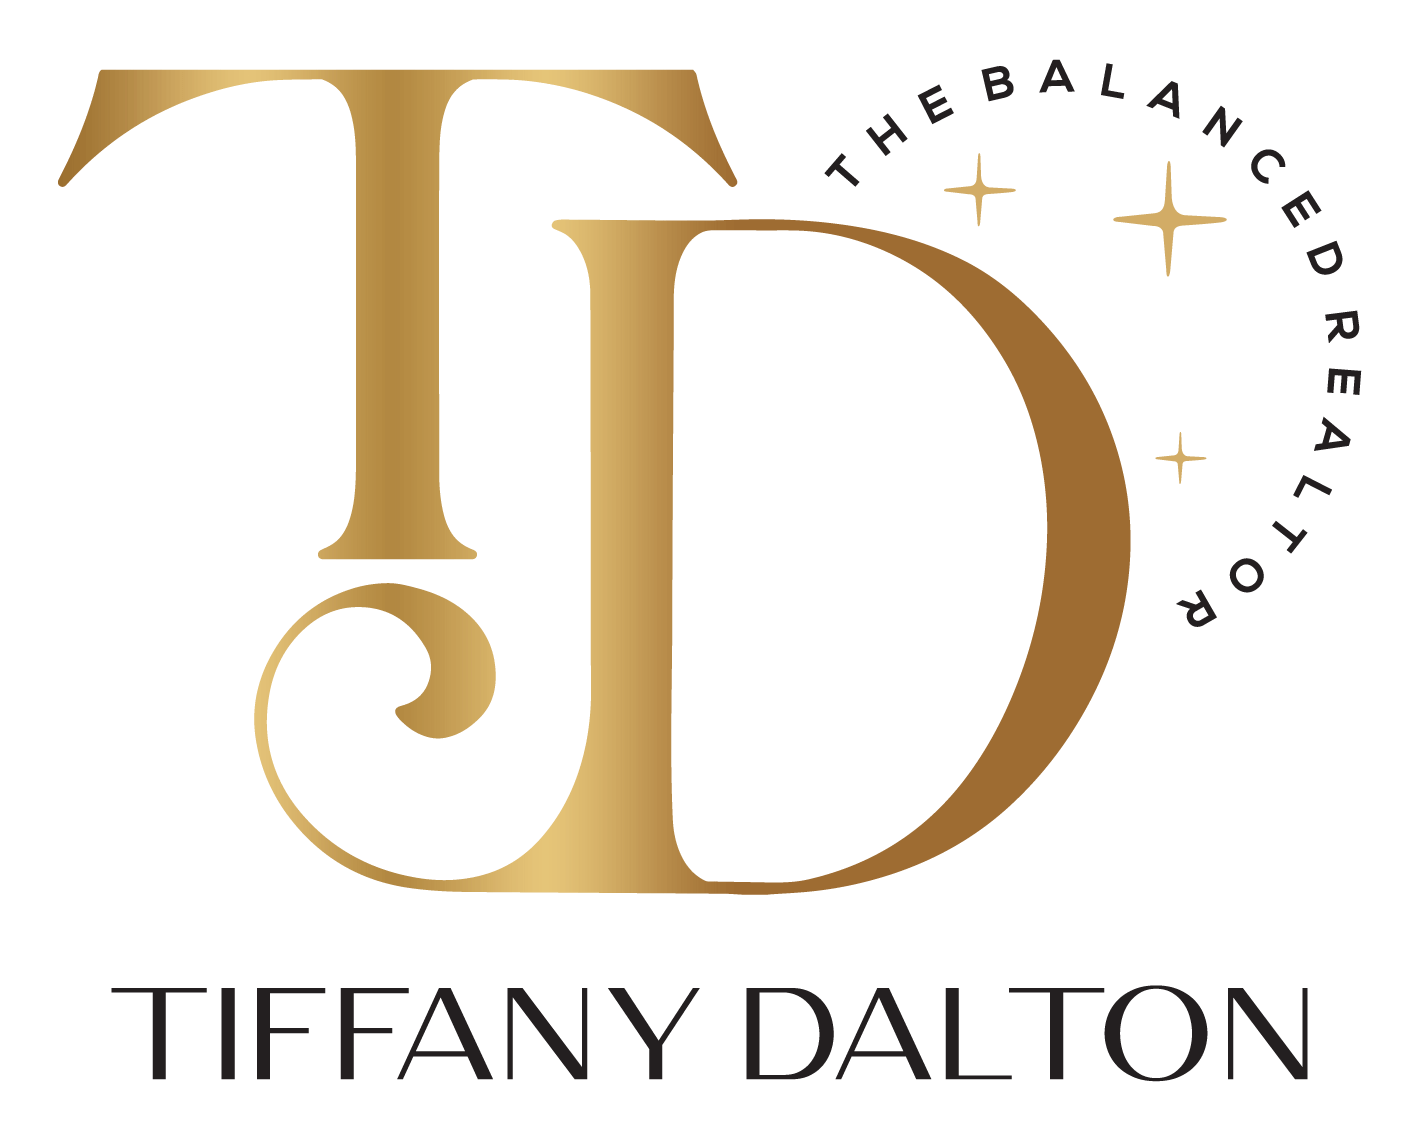 Tiffany Dalton logo